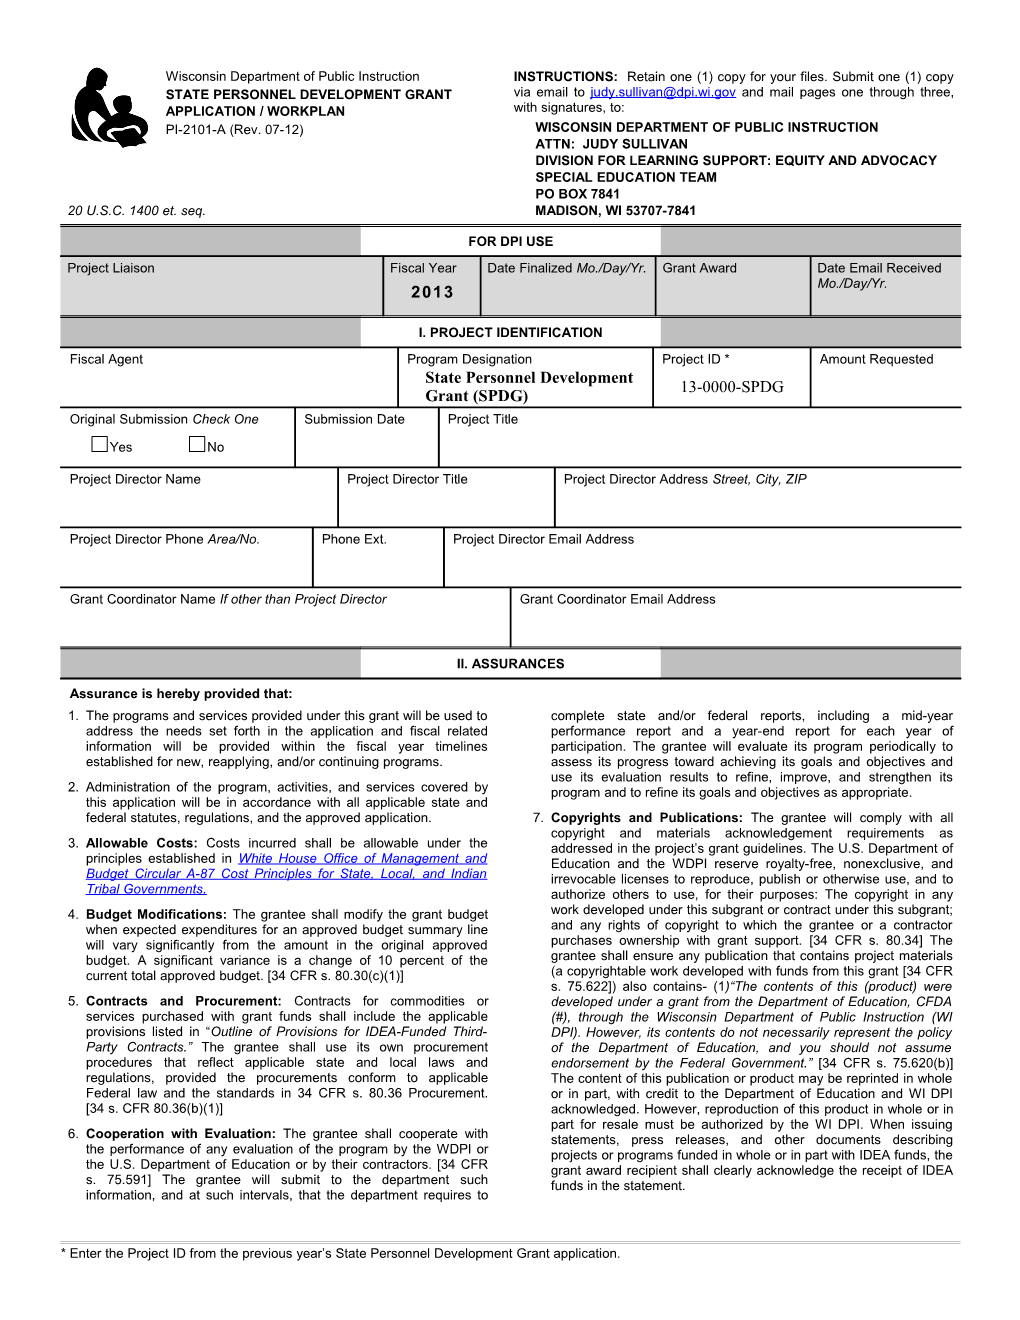 PI-2101-A State Personnel Development Grant Application / Workplan